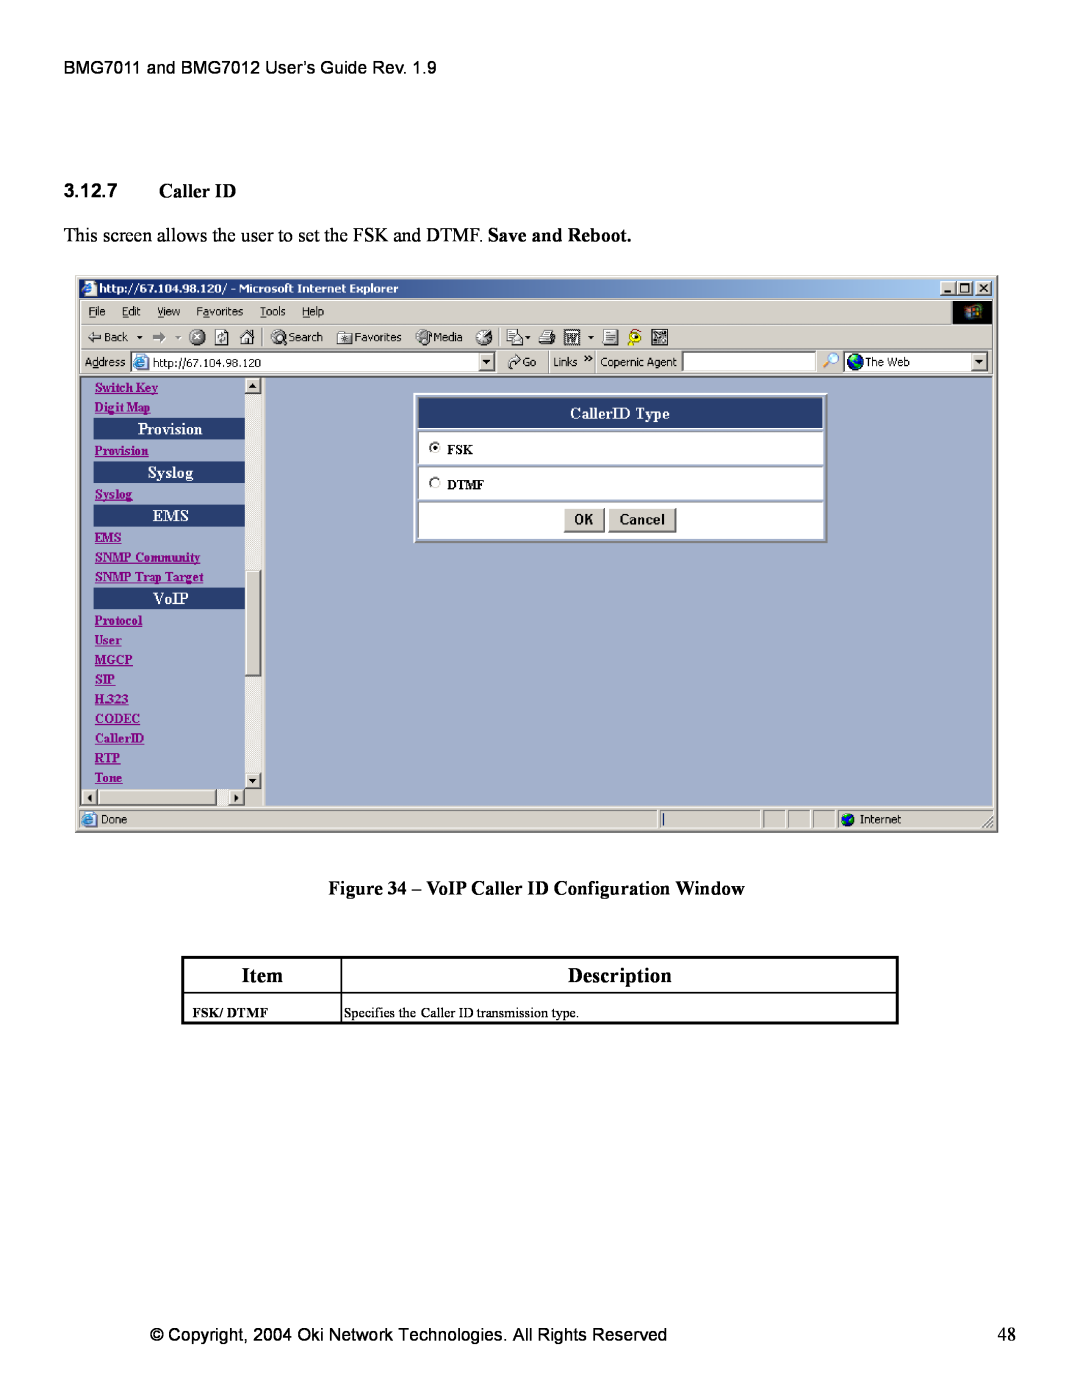 Oki BMG7012, BMG7011 manual 3.12.7Caller ID, VoIP Caller ID Configuration Window, Description, Fsk/ Dtmf 